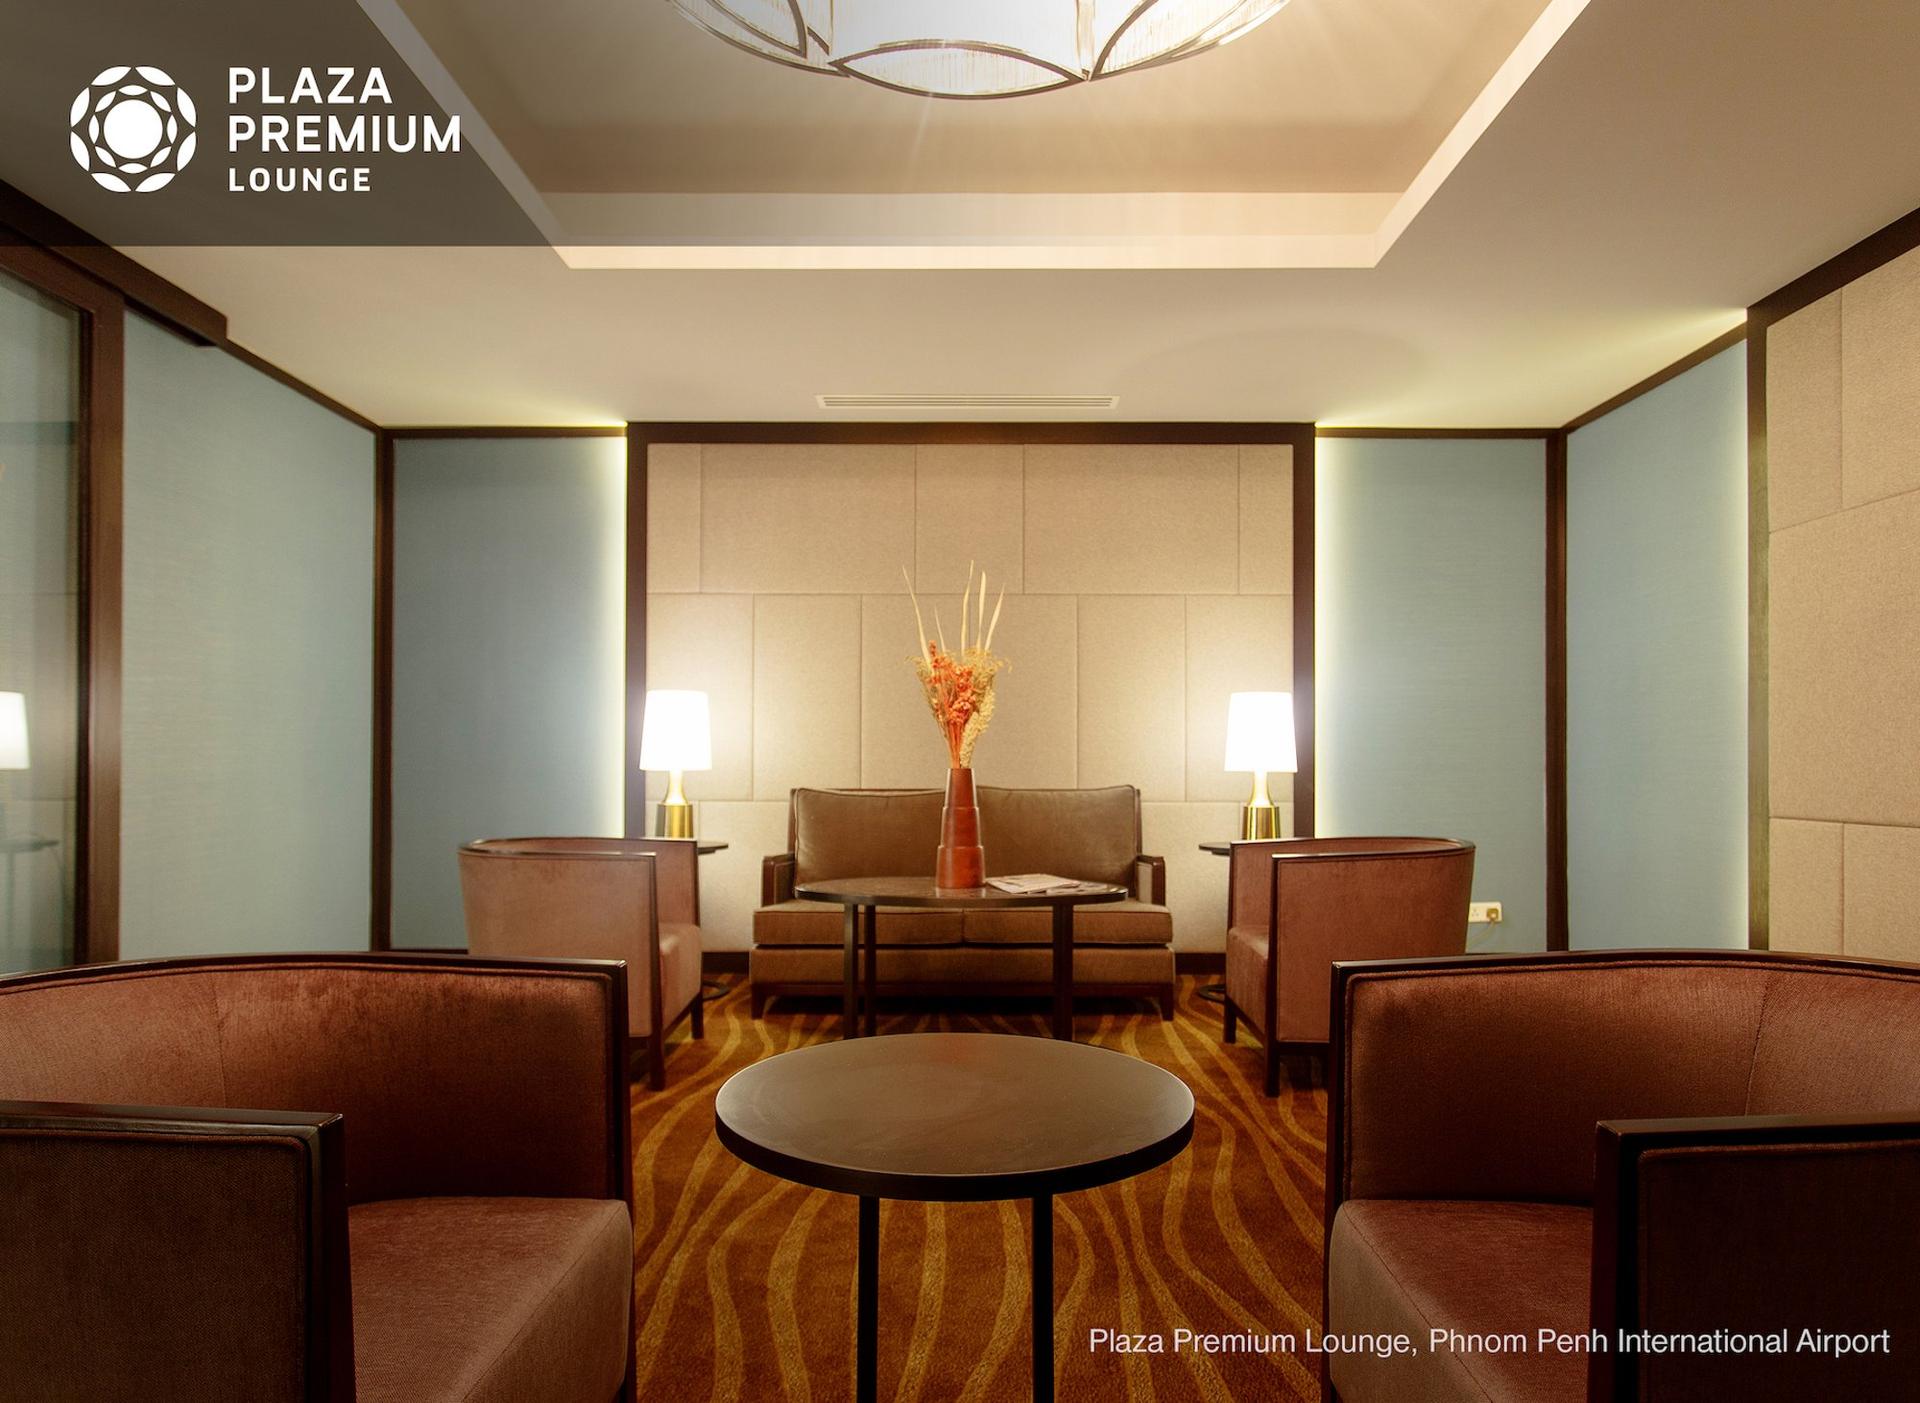 Plaza Premium Lounge image 26 of 34